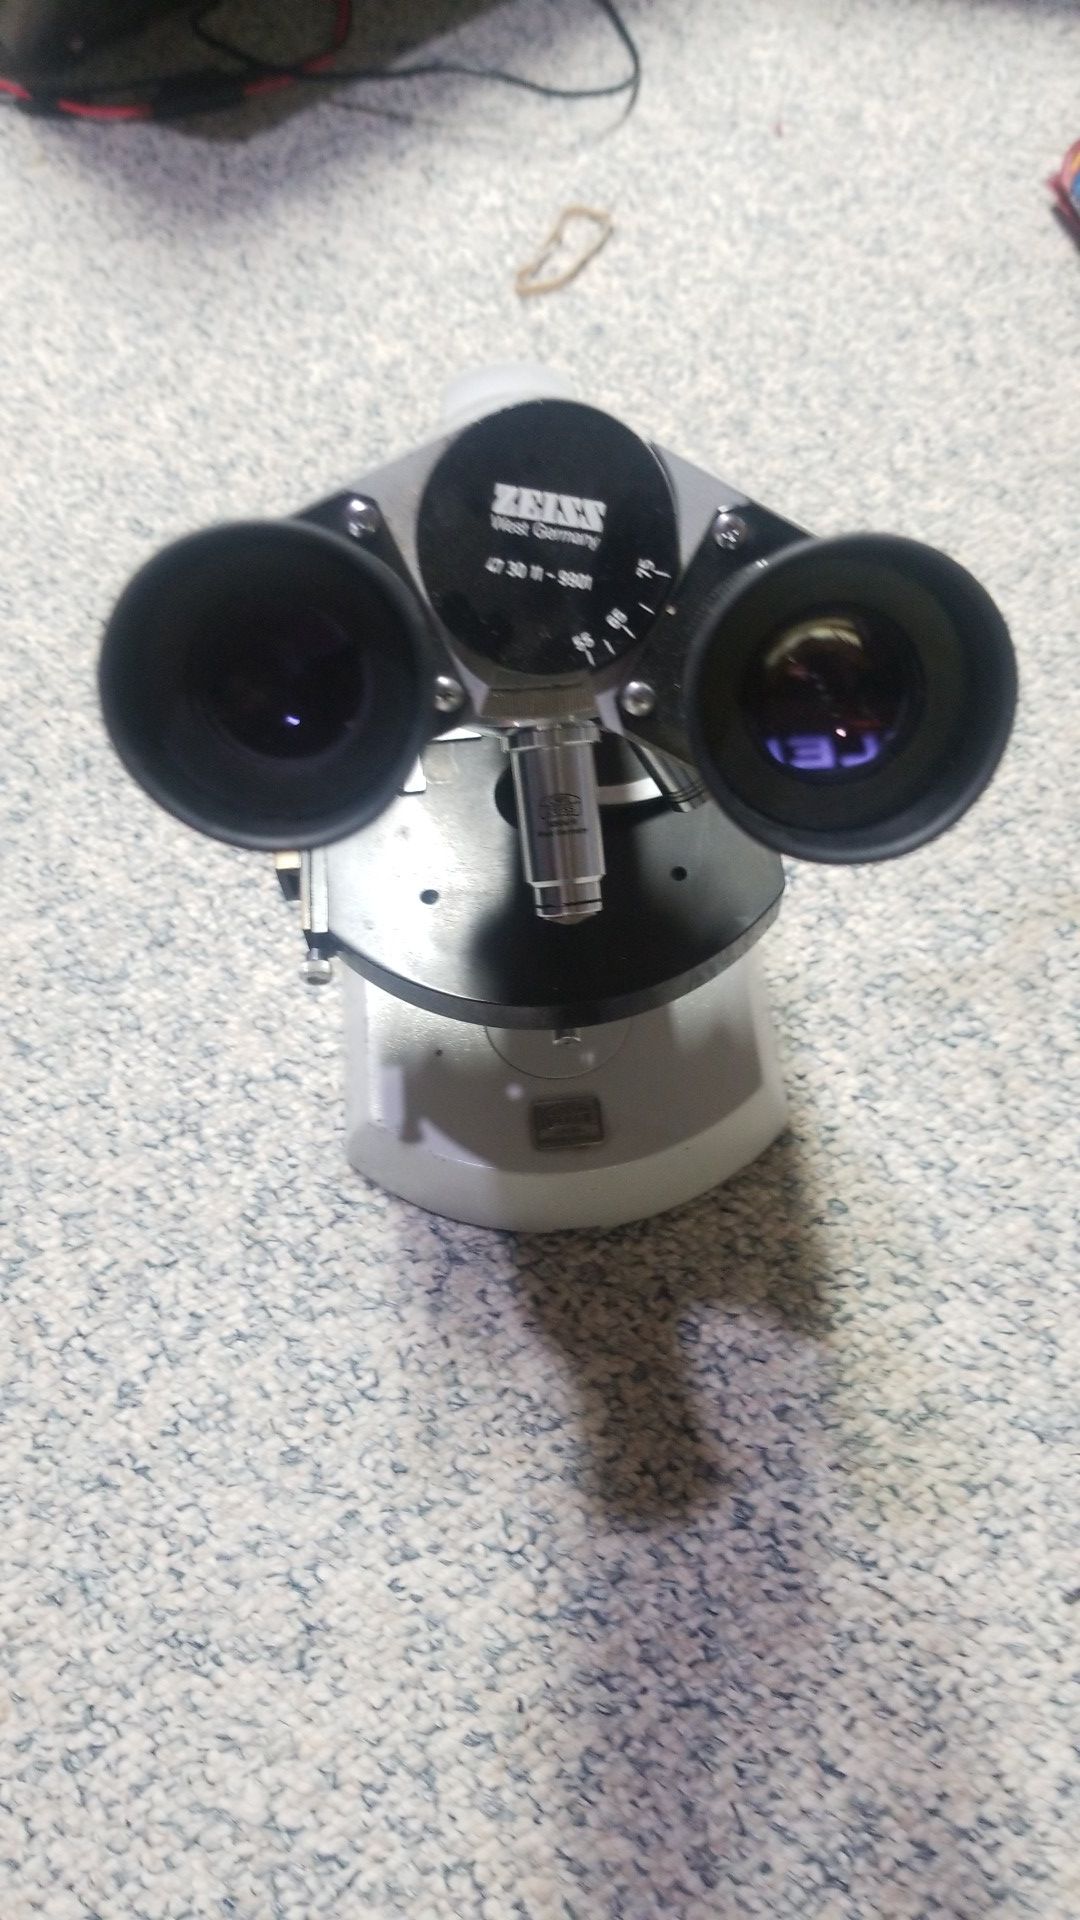 Zeiss microscope with Nikon CFW eyepieces